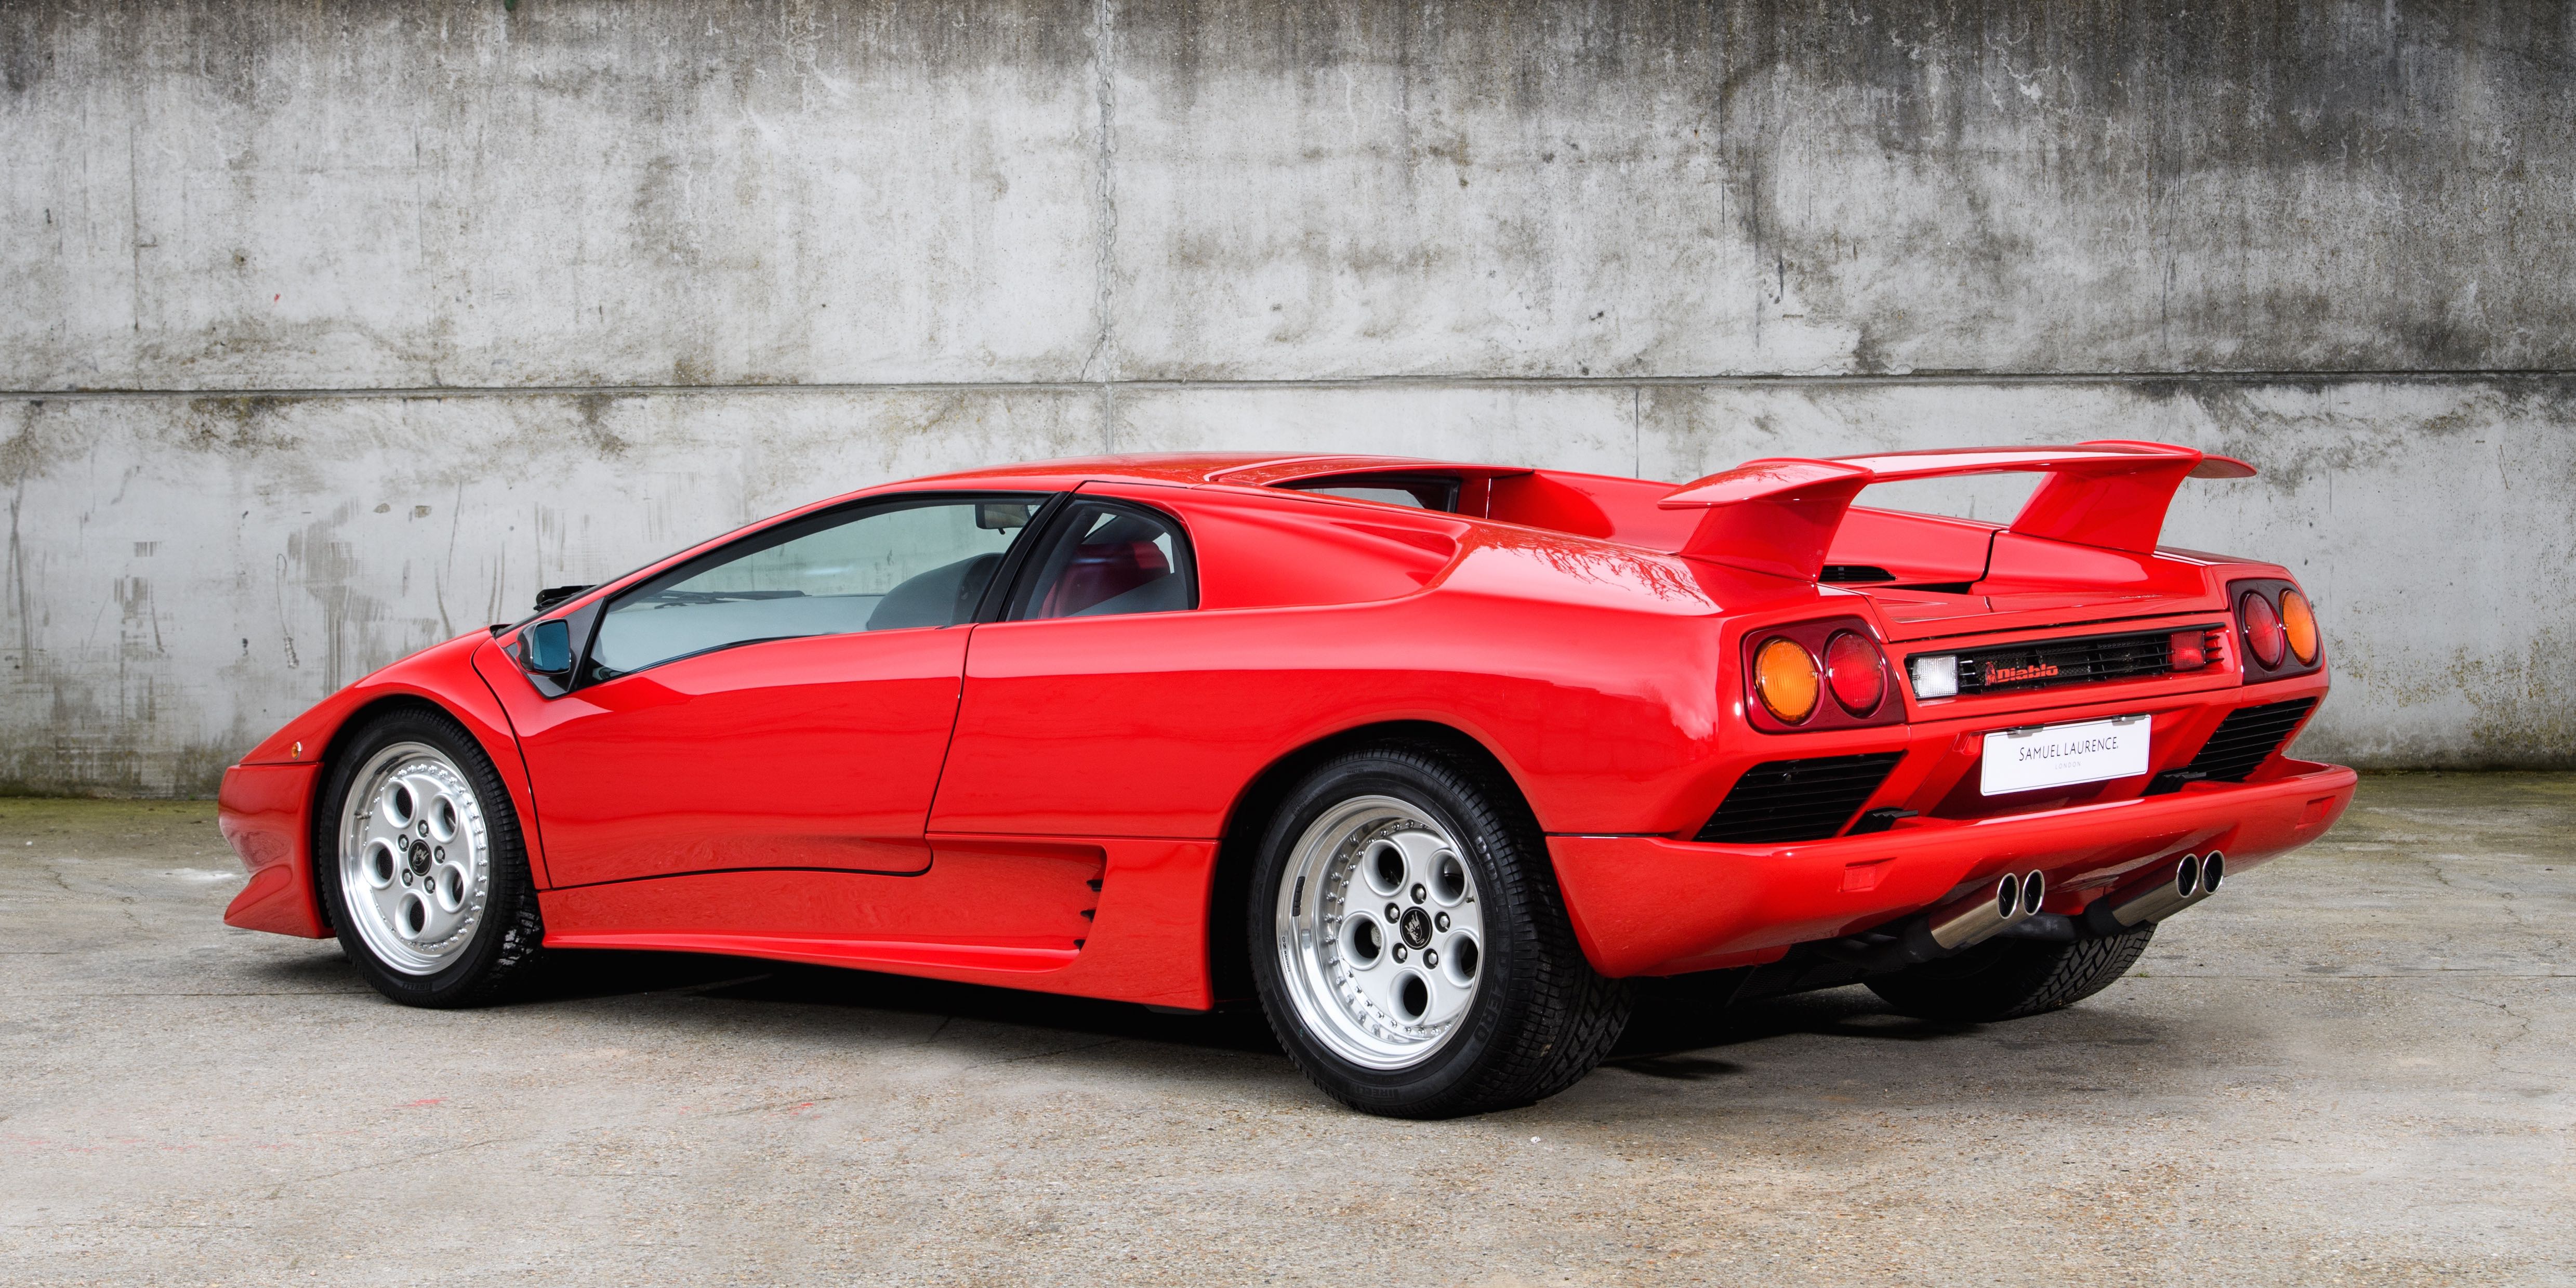 Lamborghini Diablo, Red cars Wallpapers HD / Desktop and Mobile Backgrounds